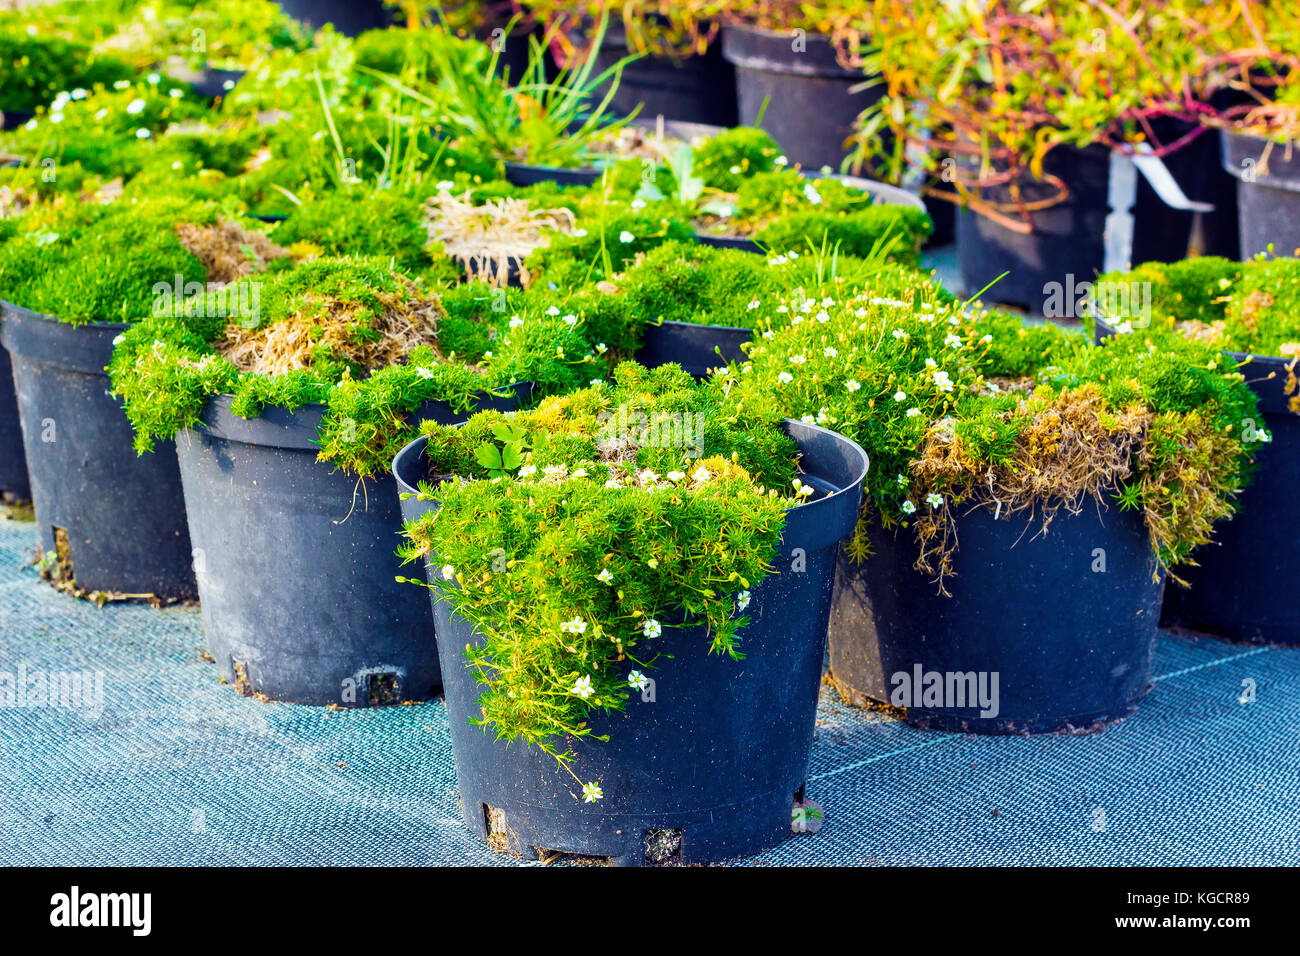 Sagina blooming plants in pots for sale. Irish moss in flowerpots Stock Photo